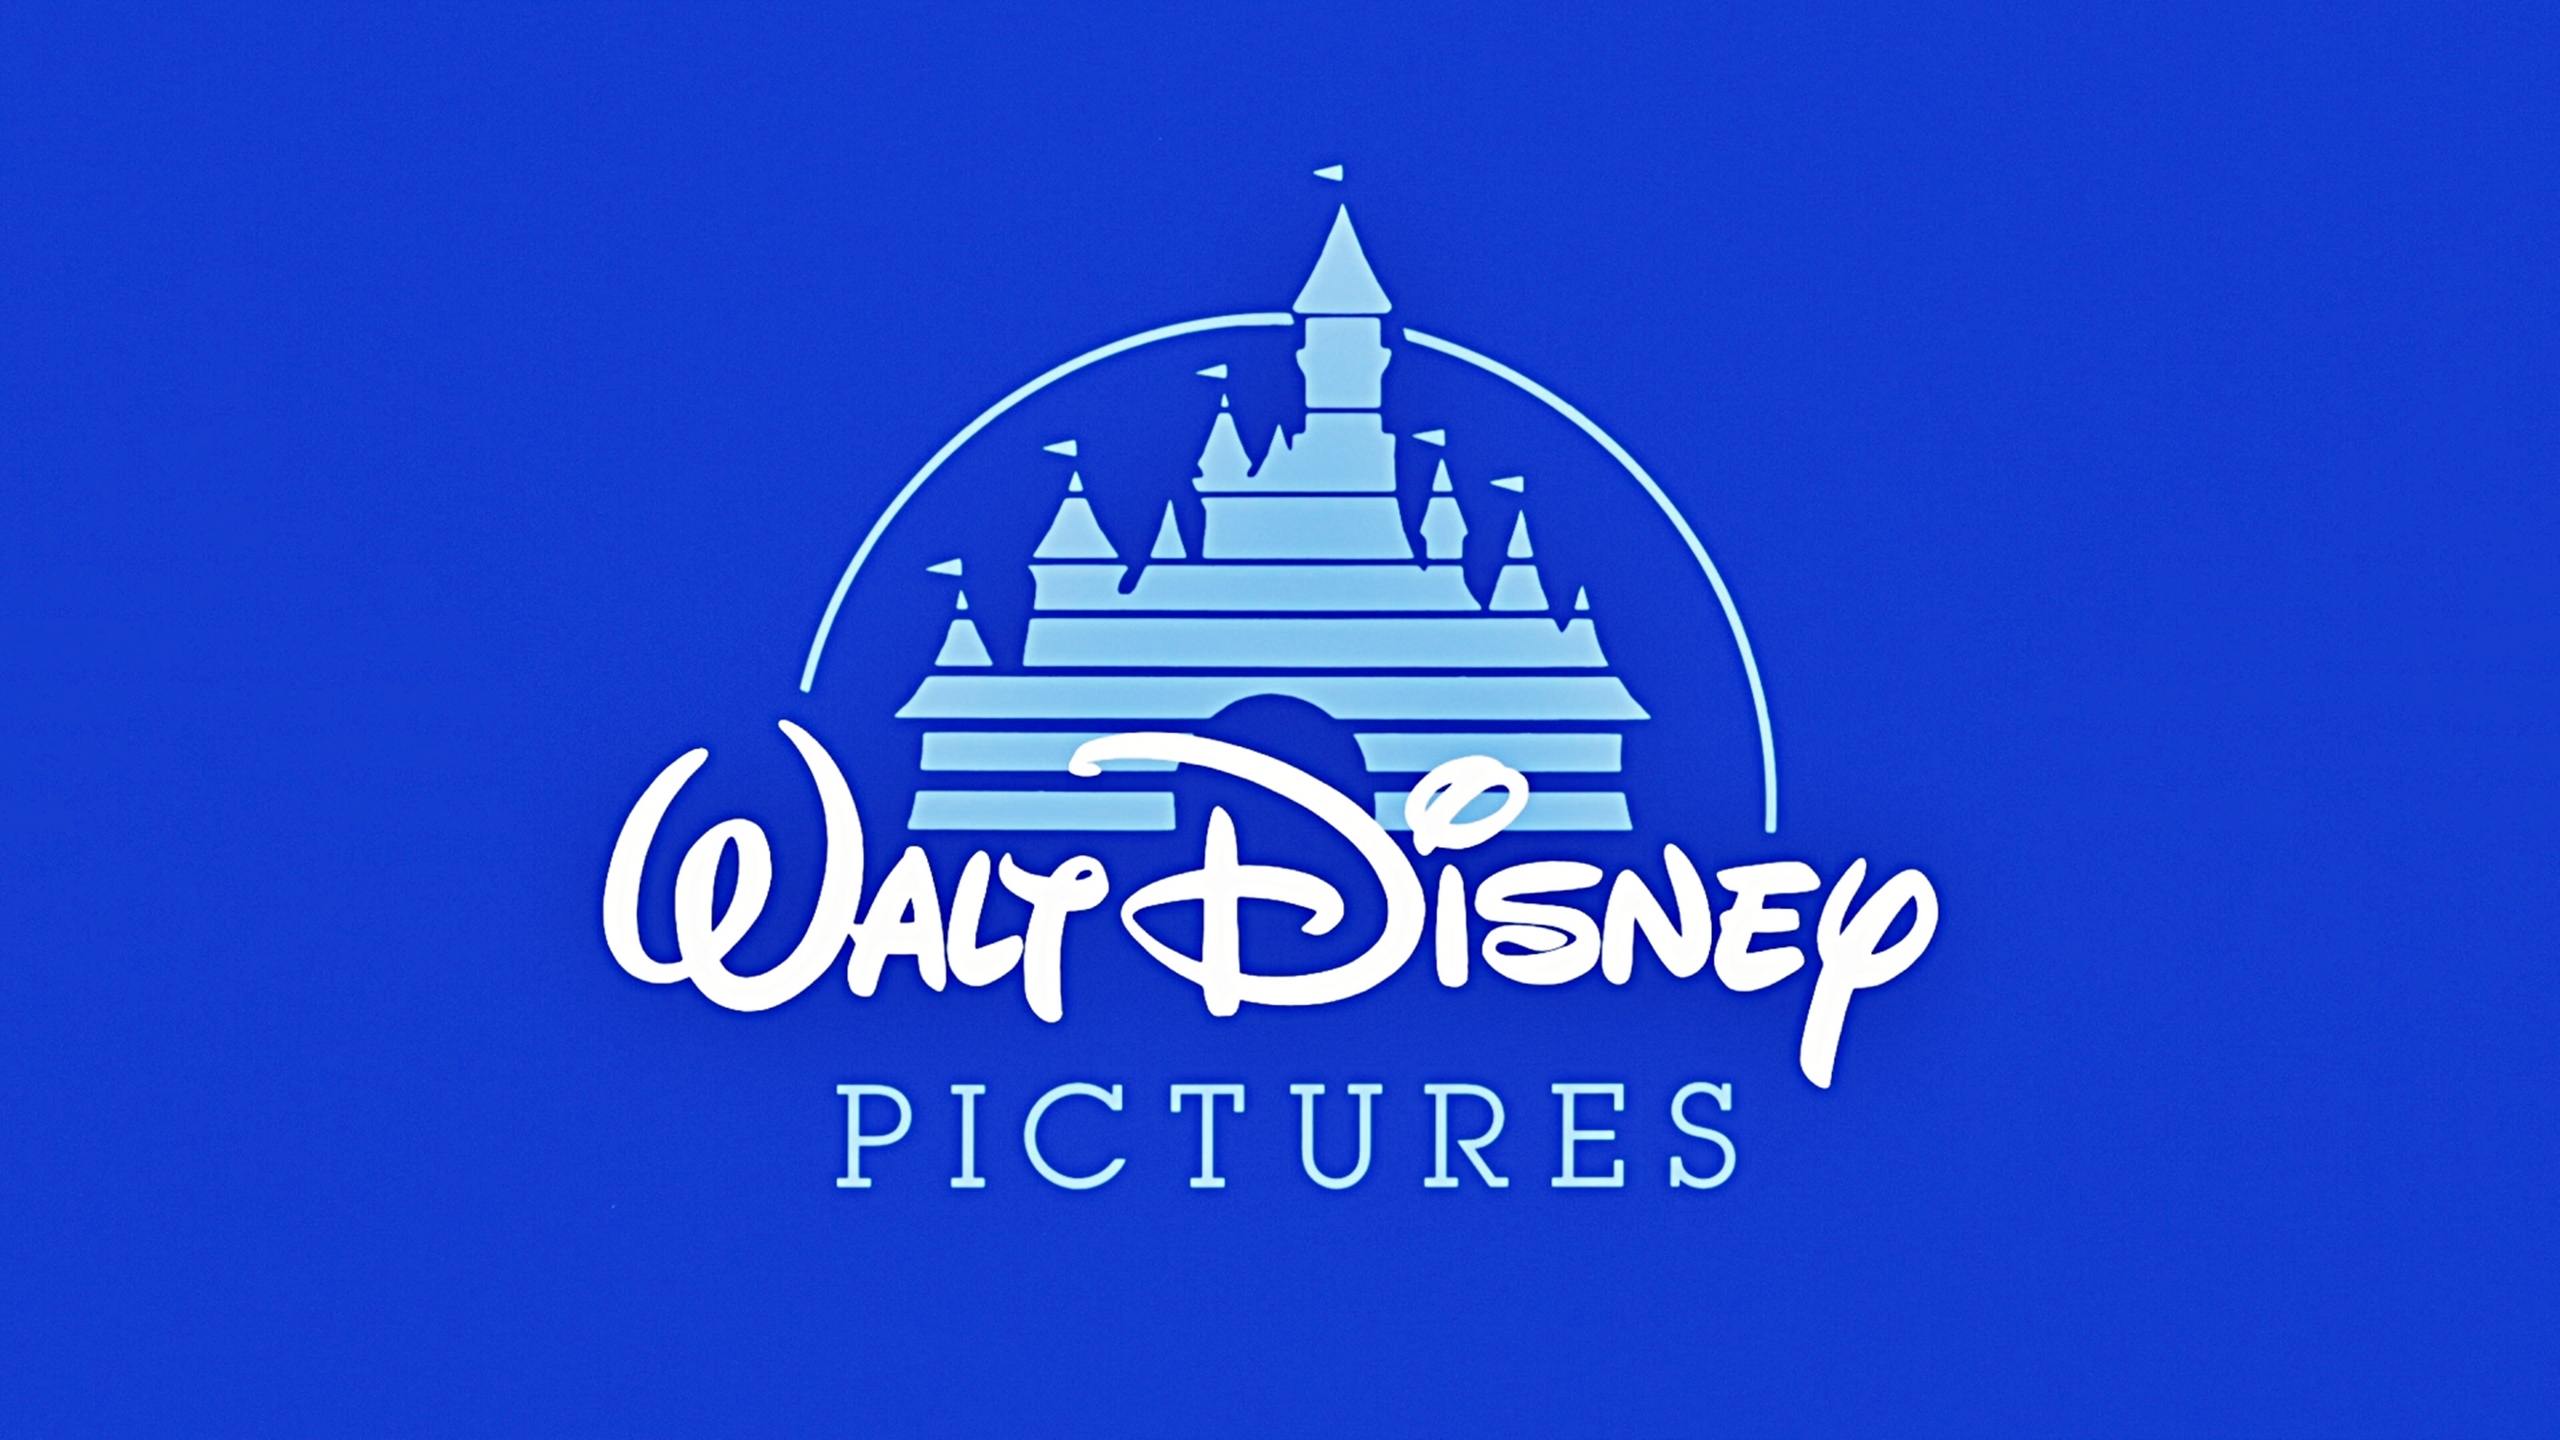 walt-disney-screencaps-the-walt-disney-logo-walt-disney-characters-31872968-2560-1440